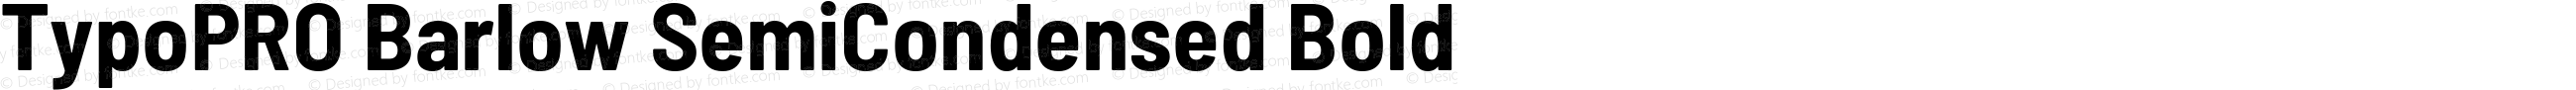 TypoPRO Barlow Semi Condensed Bold